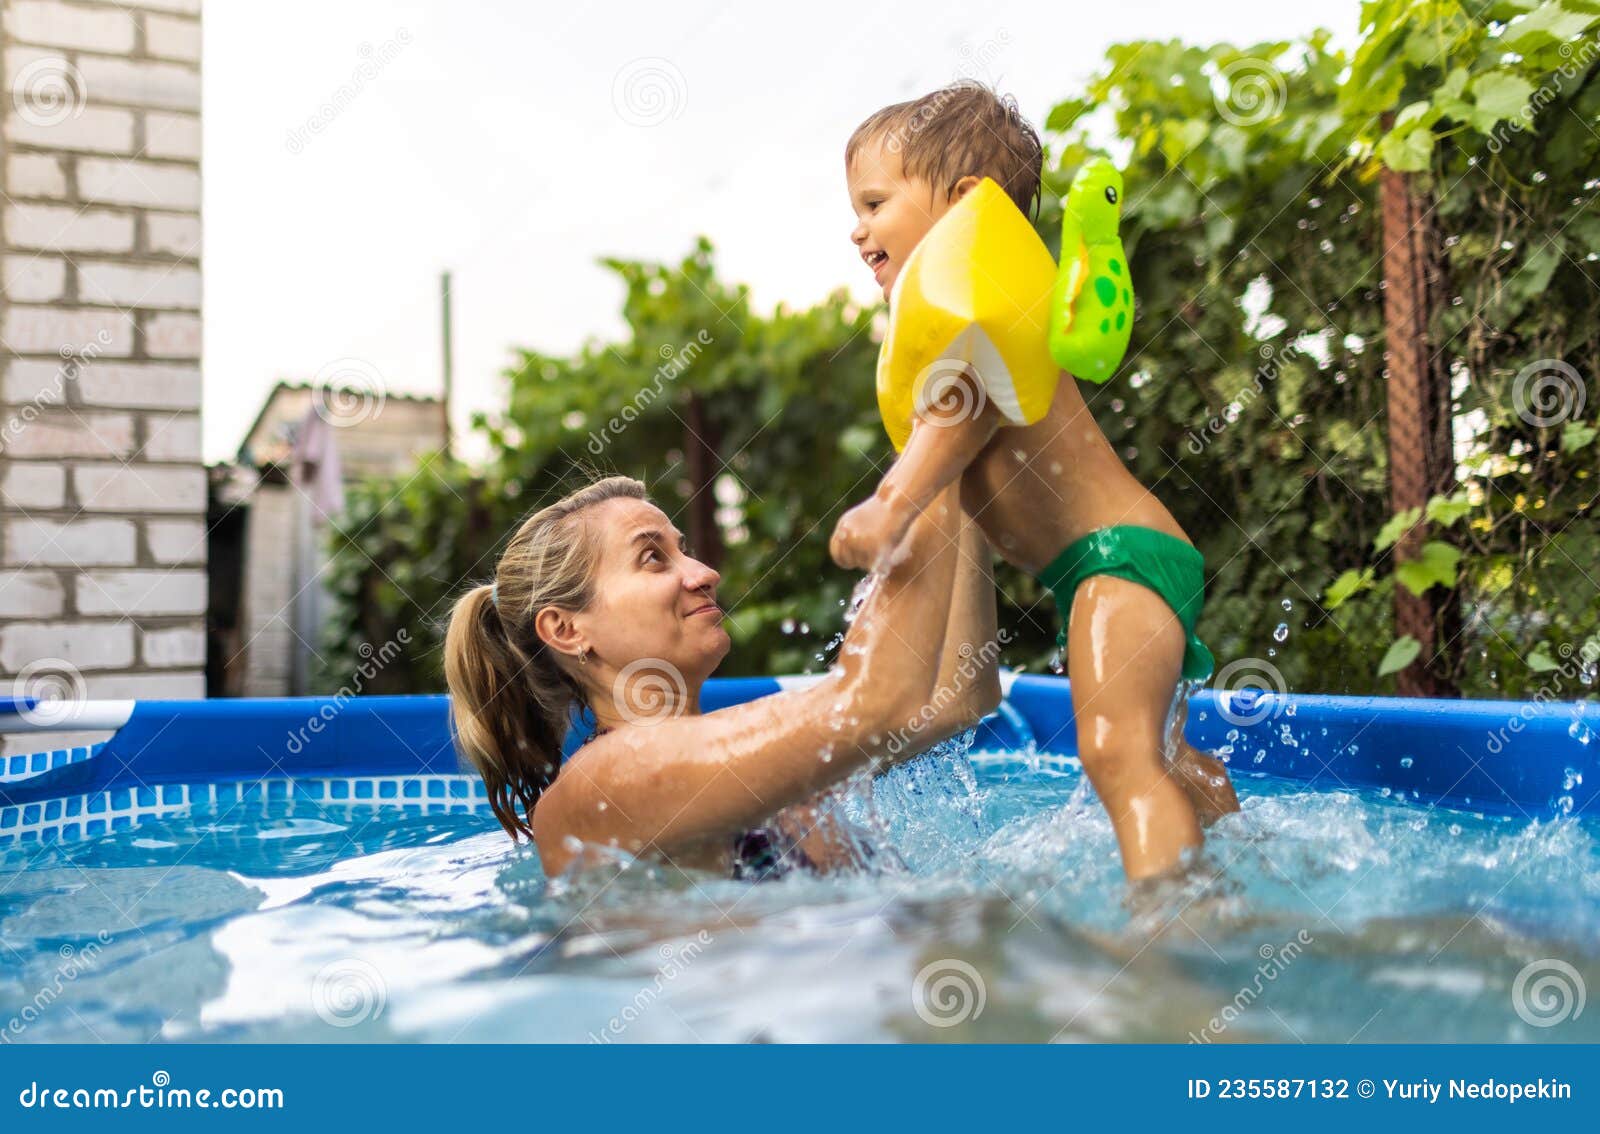 cuek aja share mom naked by pool photos